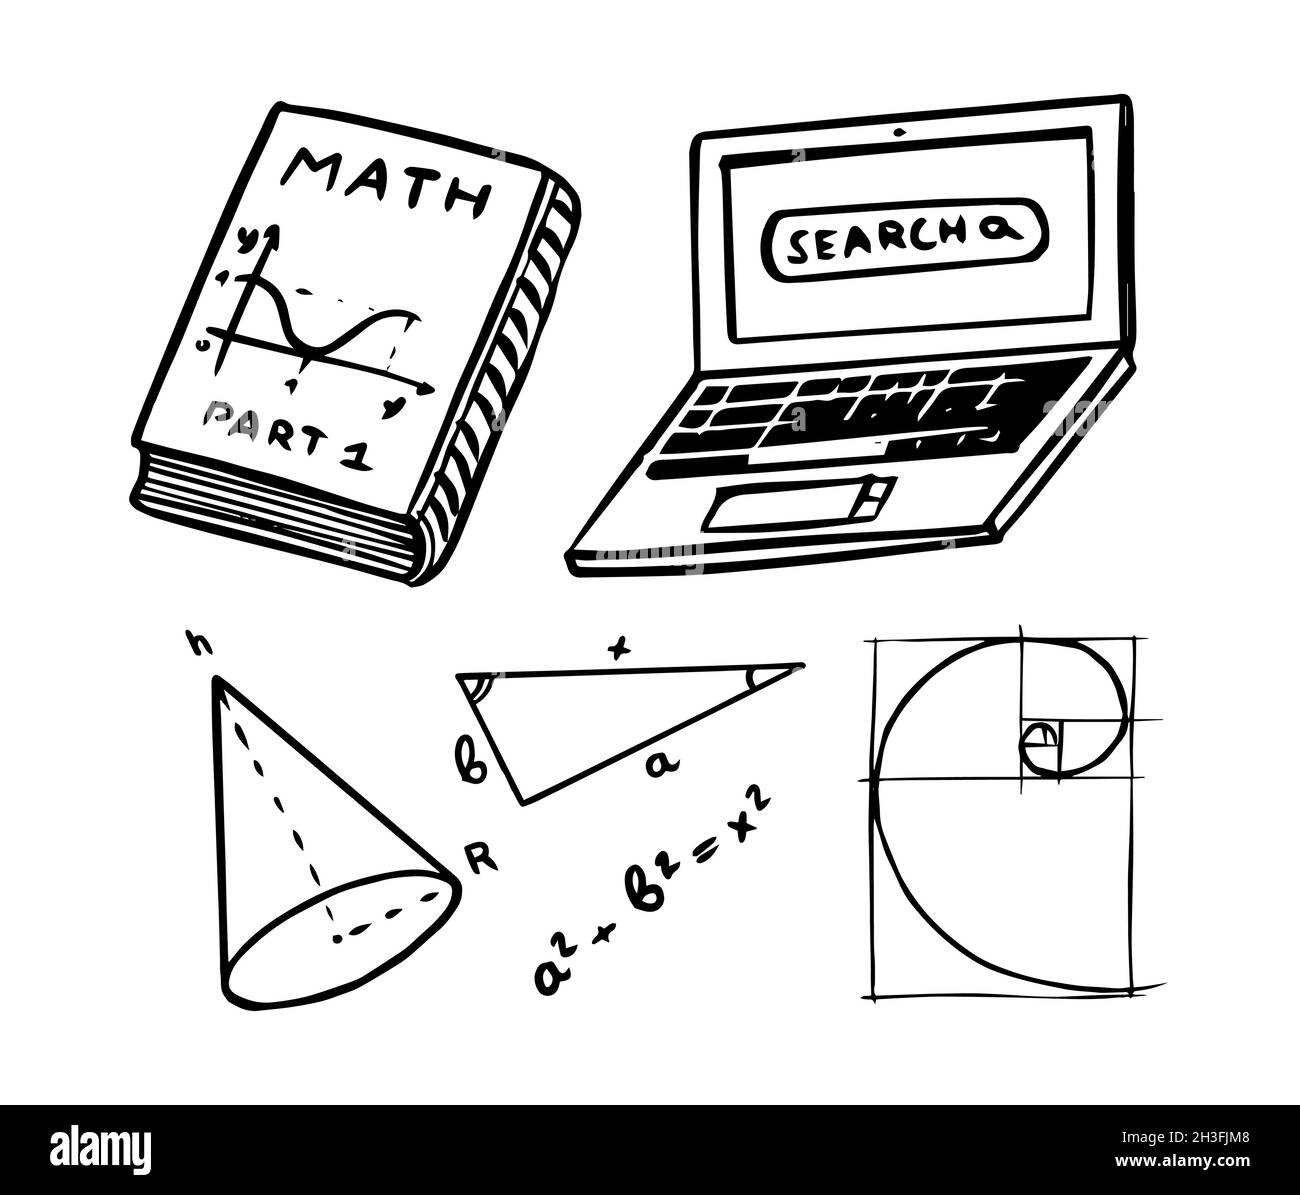 Mathematical formulas Black and White Stock Photos & Images - Alamy